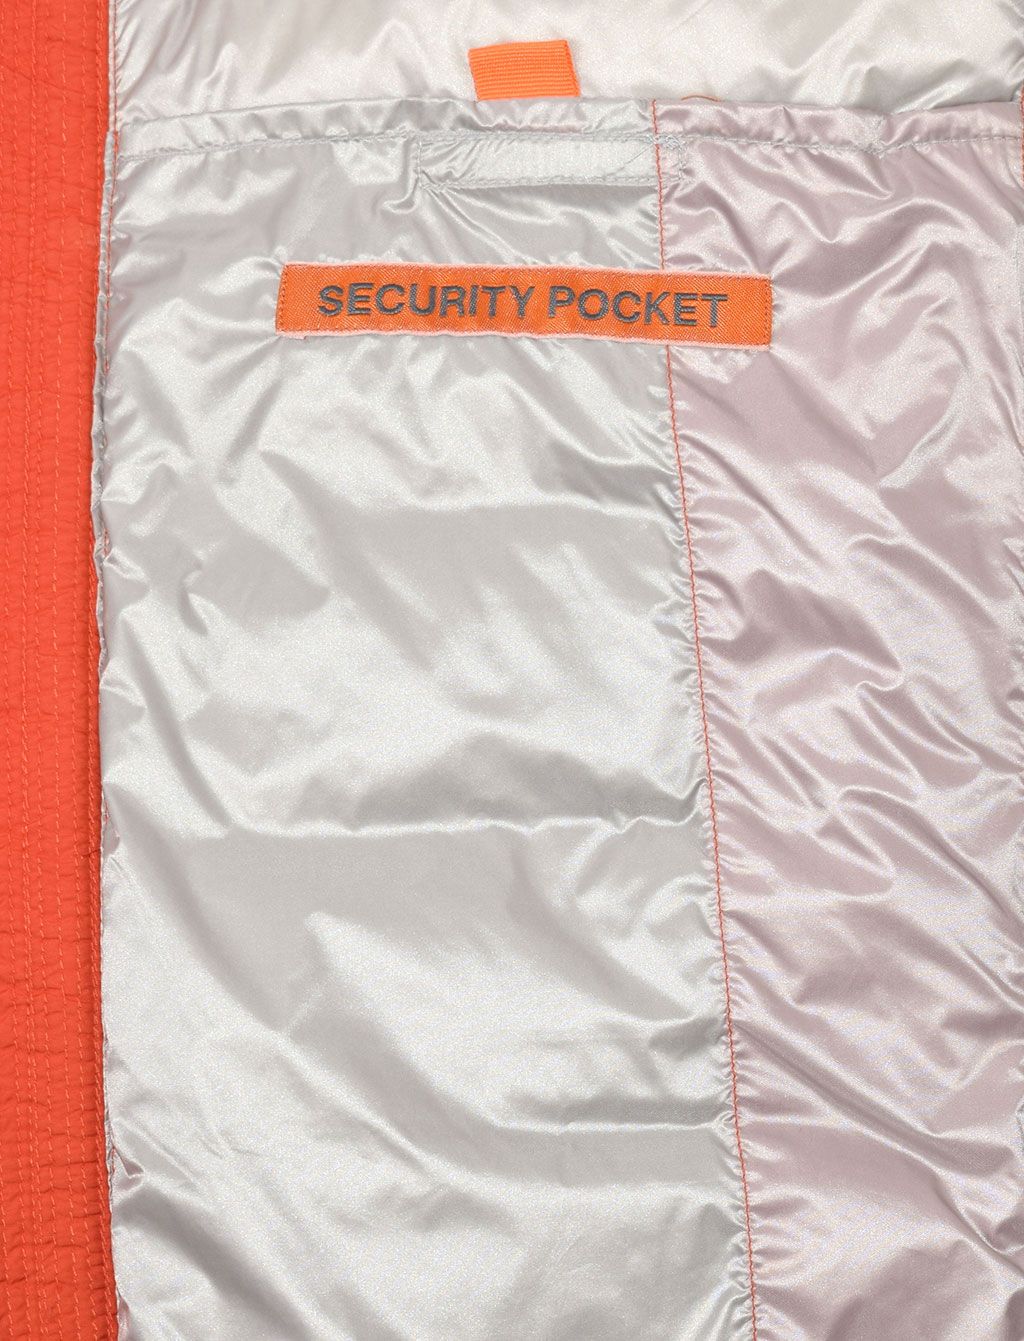 Куртка-пуховик лёгкая PARAJUMPERS LAST MINUTE FW 19/20 orange 